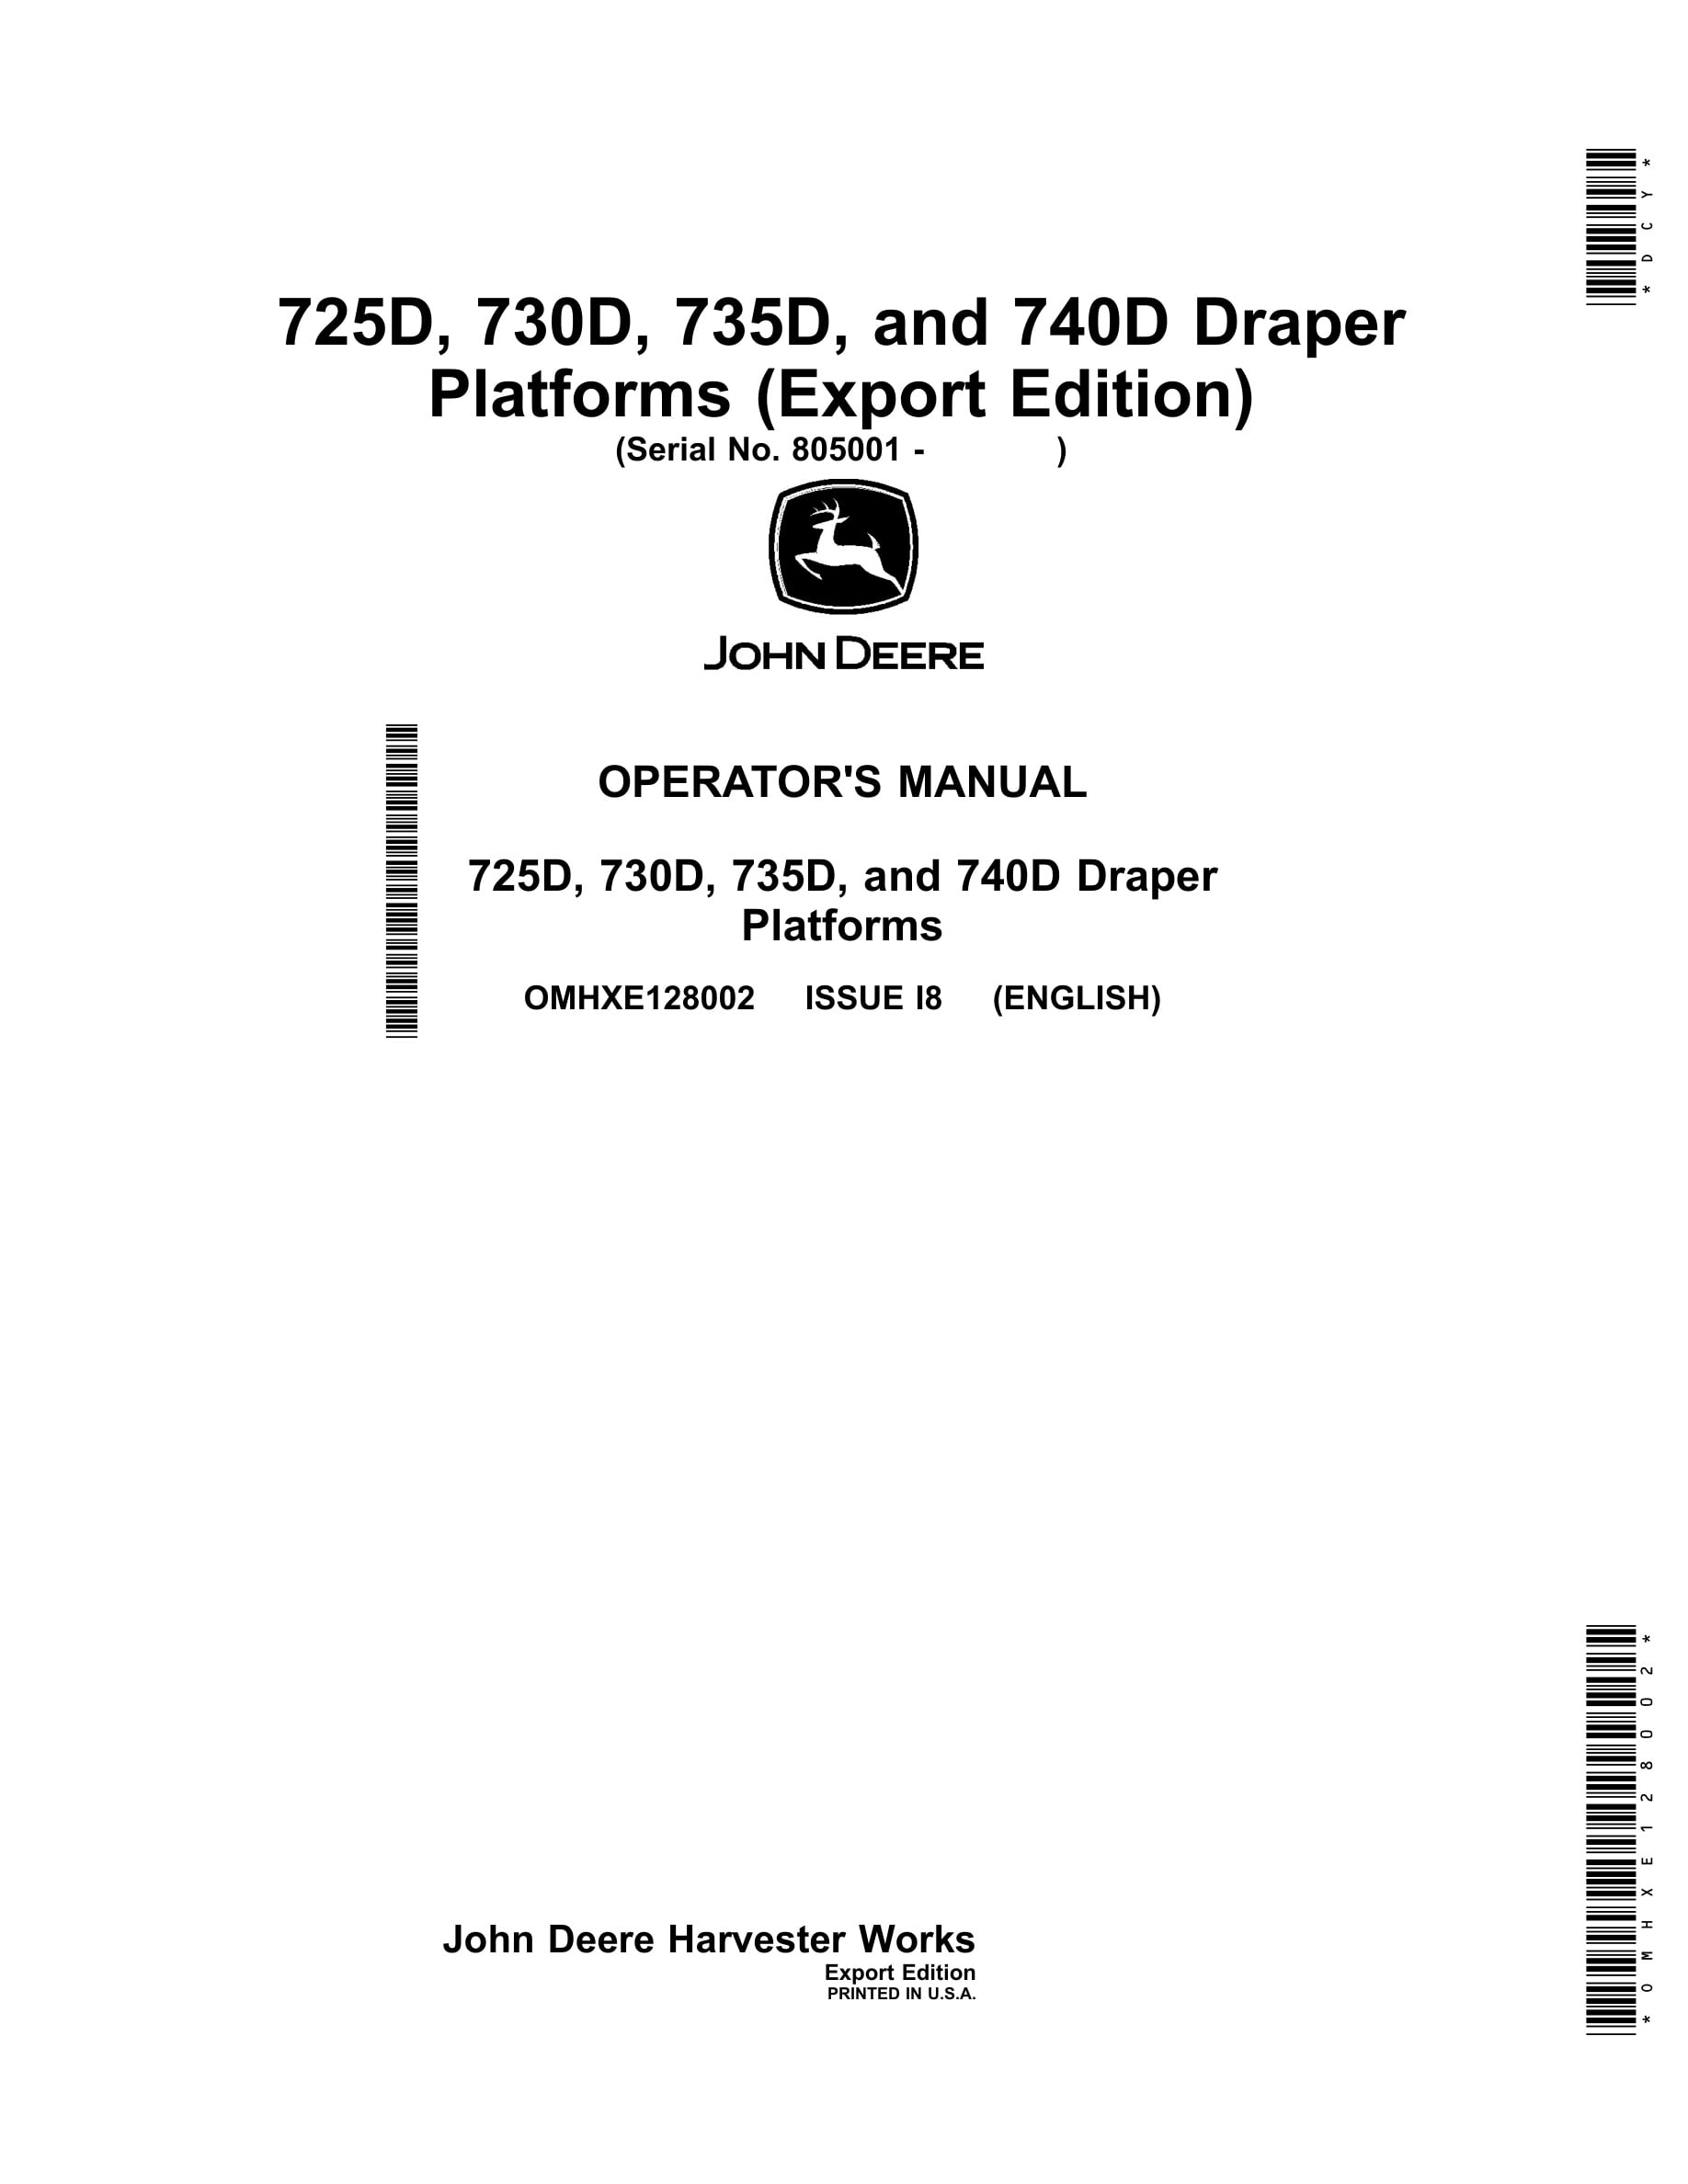 John Deere 725D, 730D, 735D, and 740D Draper Platforms Operator Manual OMHXE128002-1